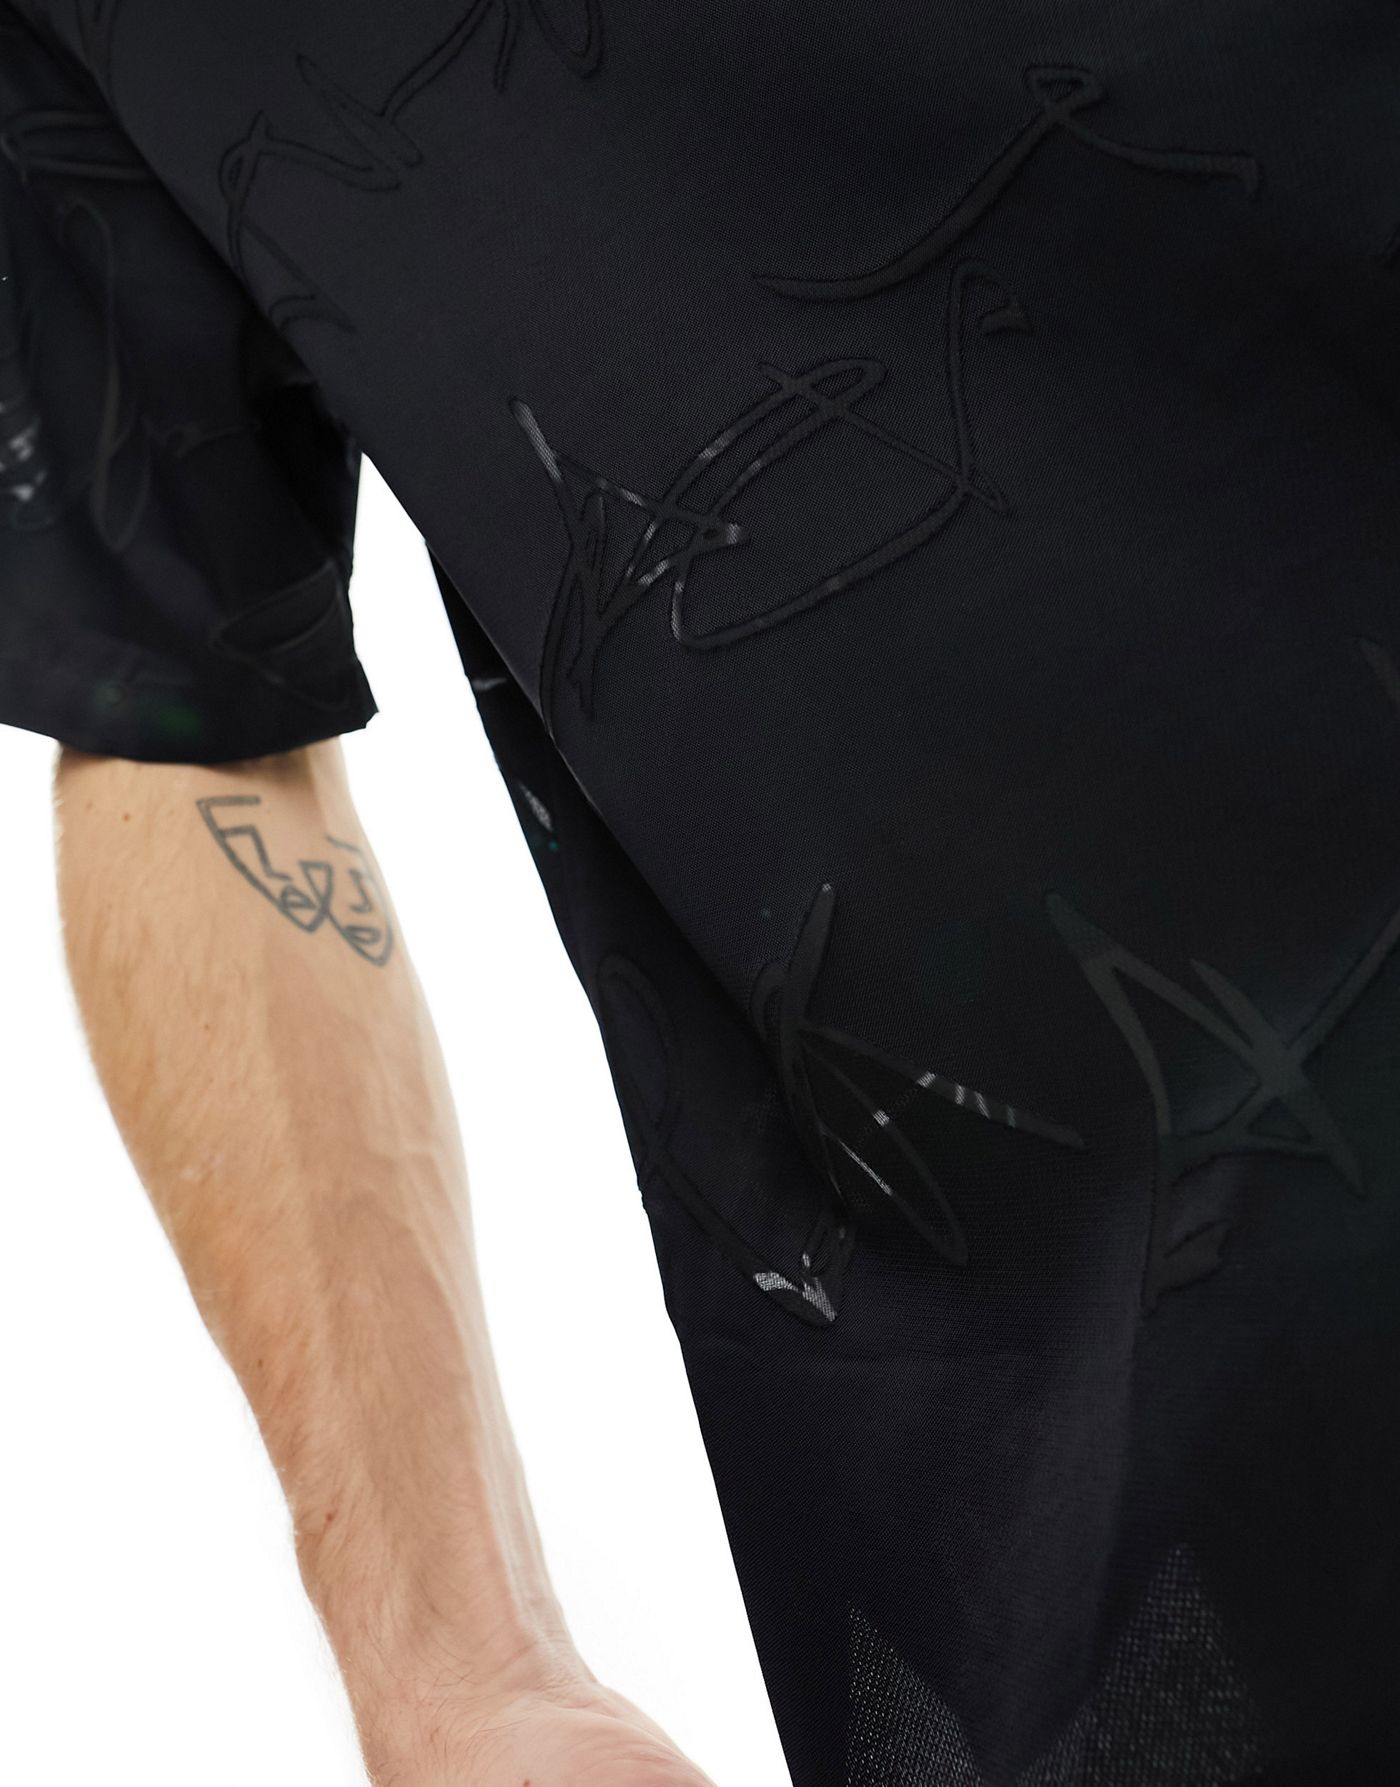 Bershka tonal embroidered satin shirt in black